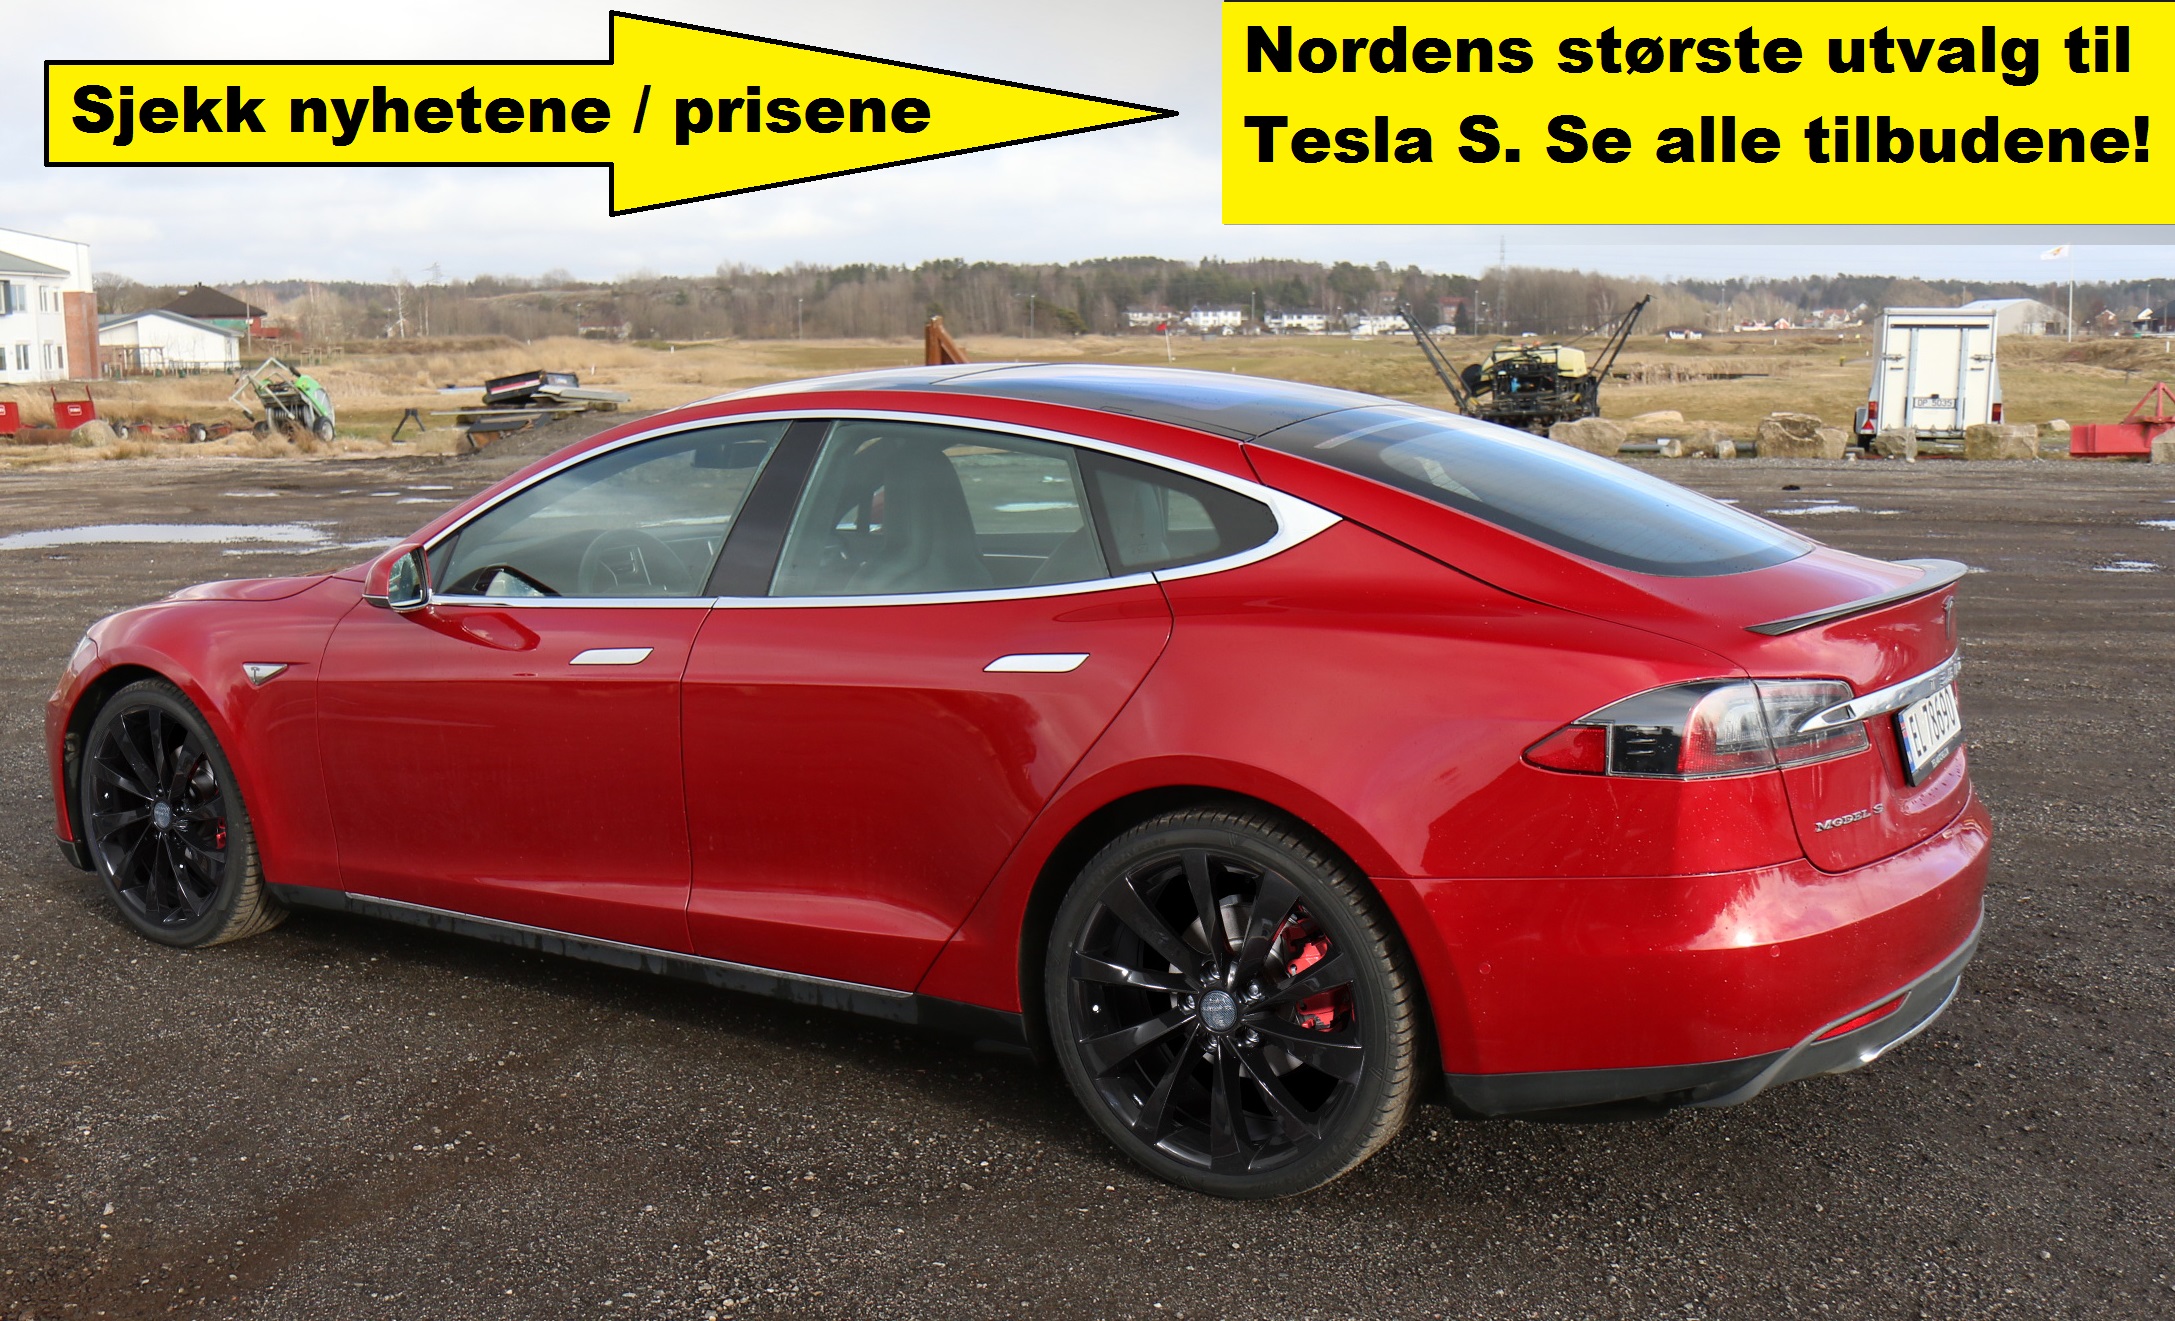 Vinterhjul i 21 tommere til Tesla S i staggered versjon